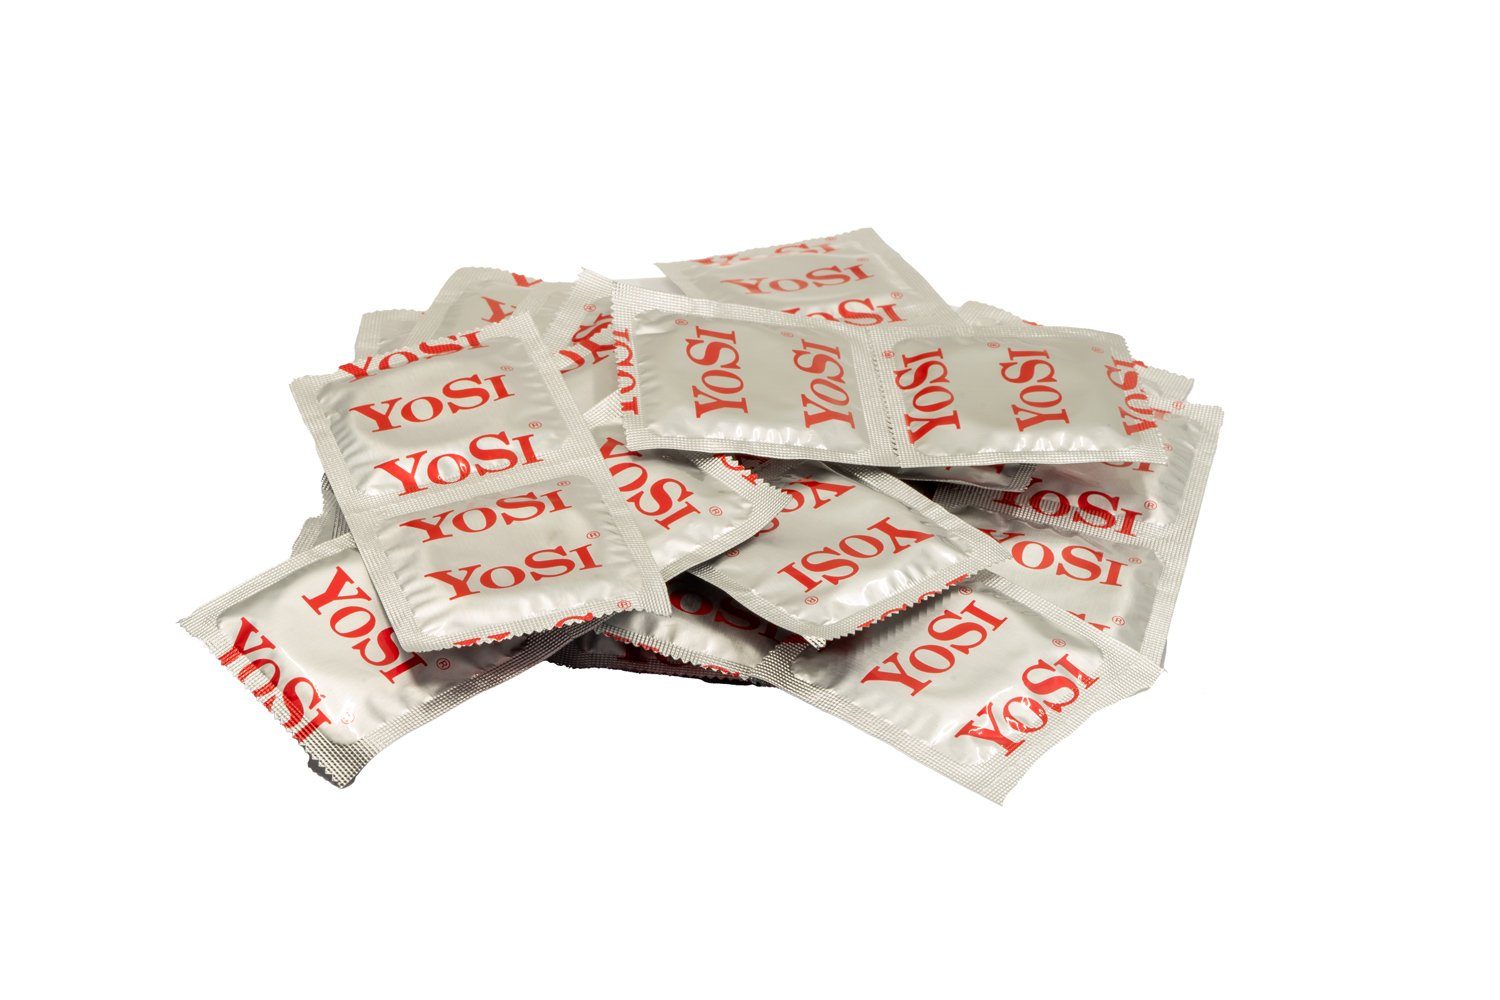 YOSI Kondome 25877R, 2er Set XXL, Markenkondome extra groß - Inhalt jeweils 50 Stück